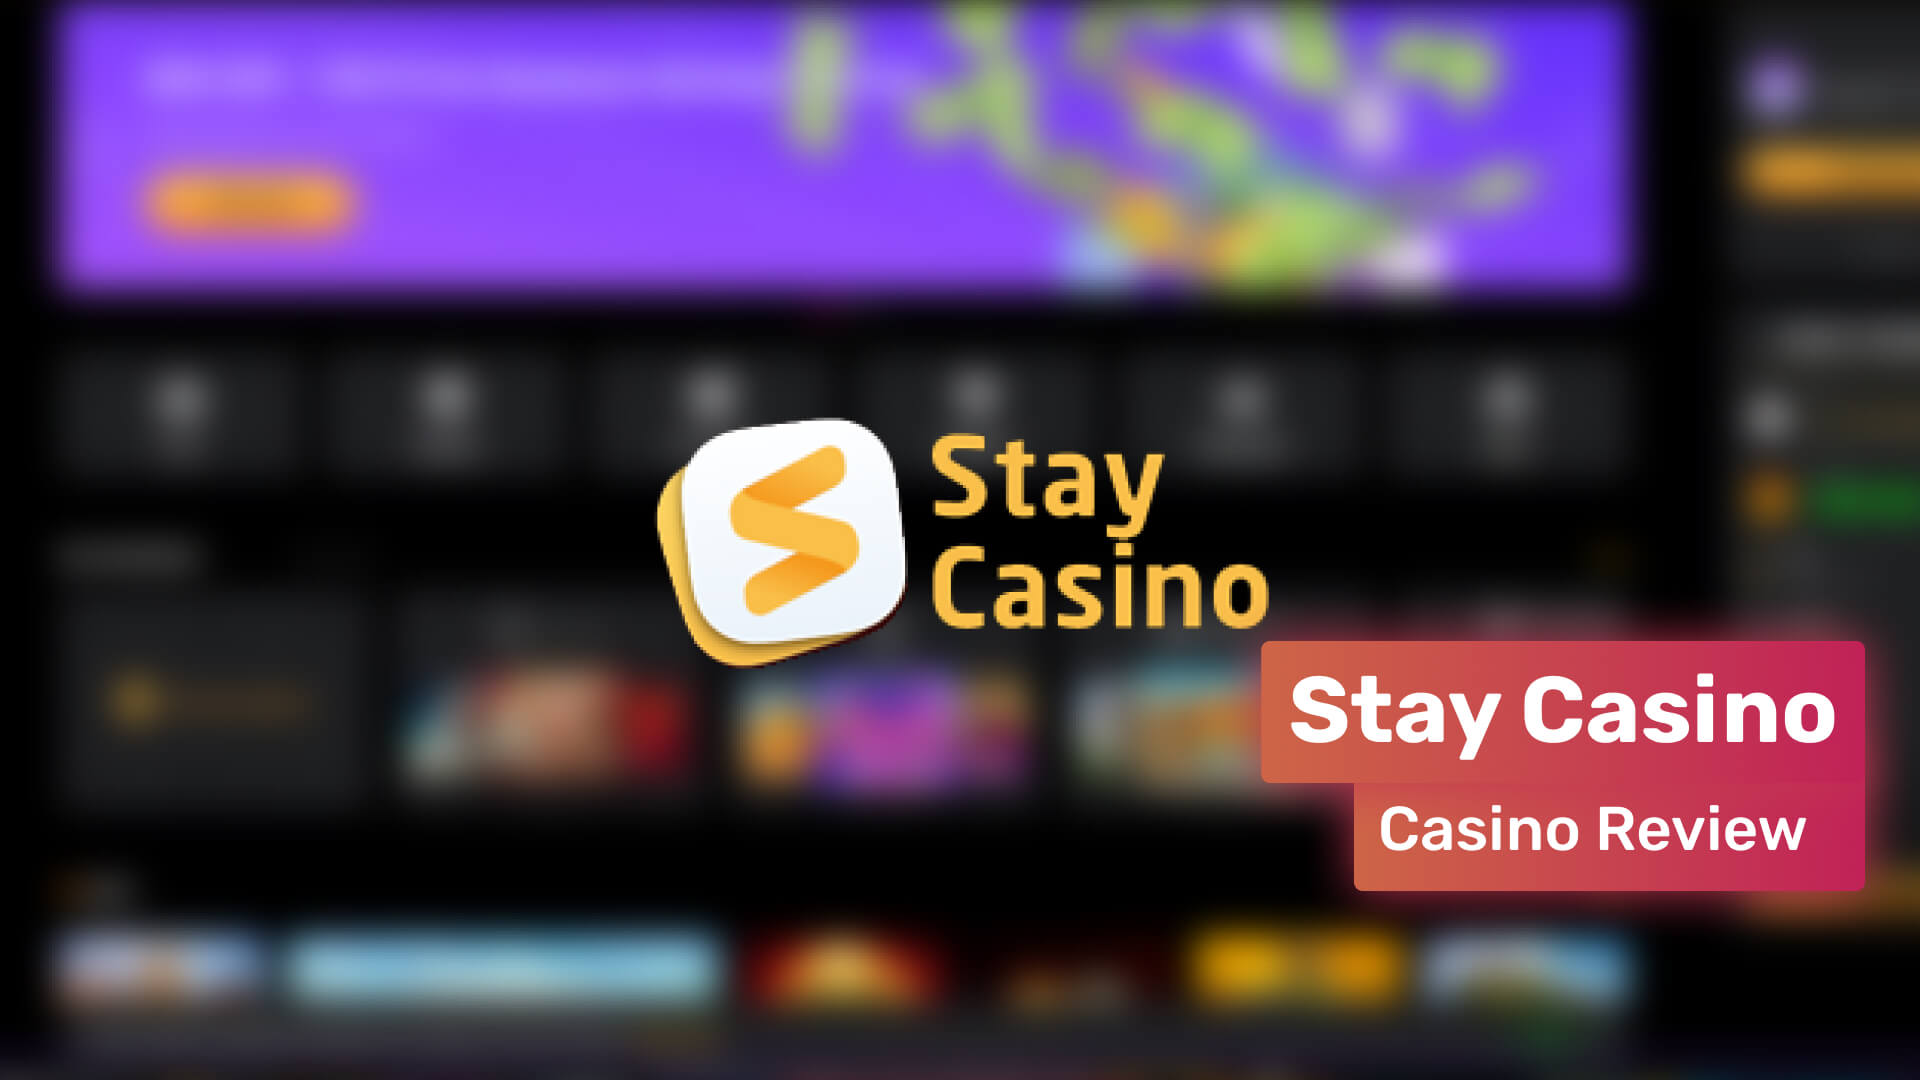 Regarding Stay Casino, located in New Zealand